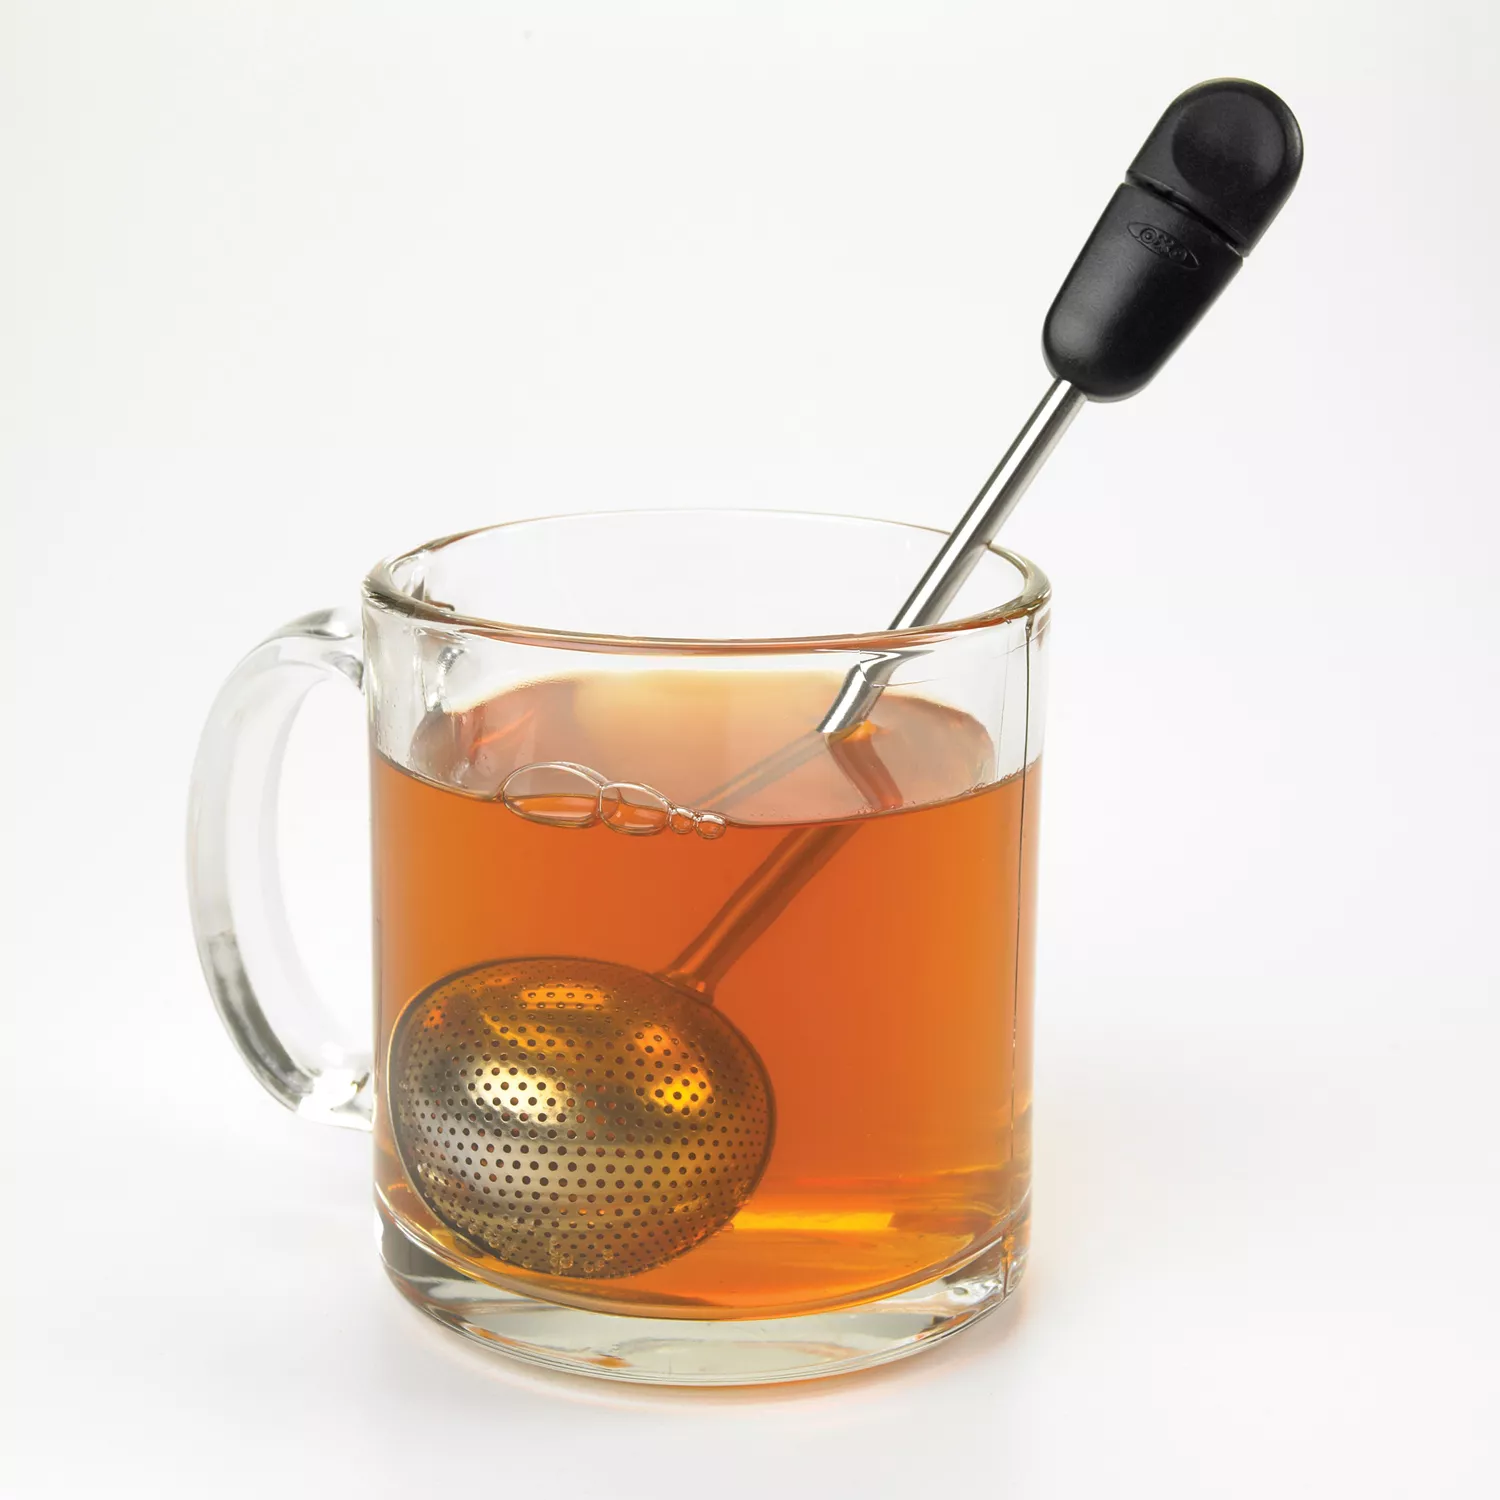 Good Grips Classic Tea Kettle (54 oz), OXO